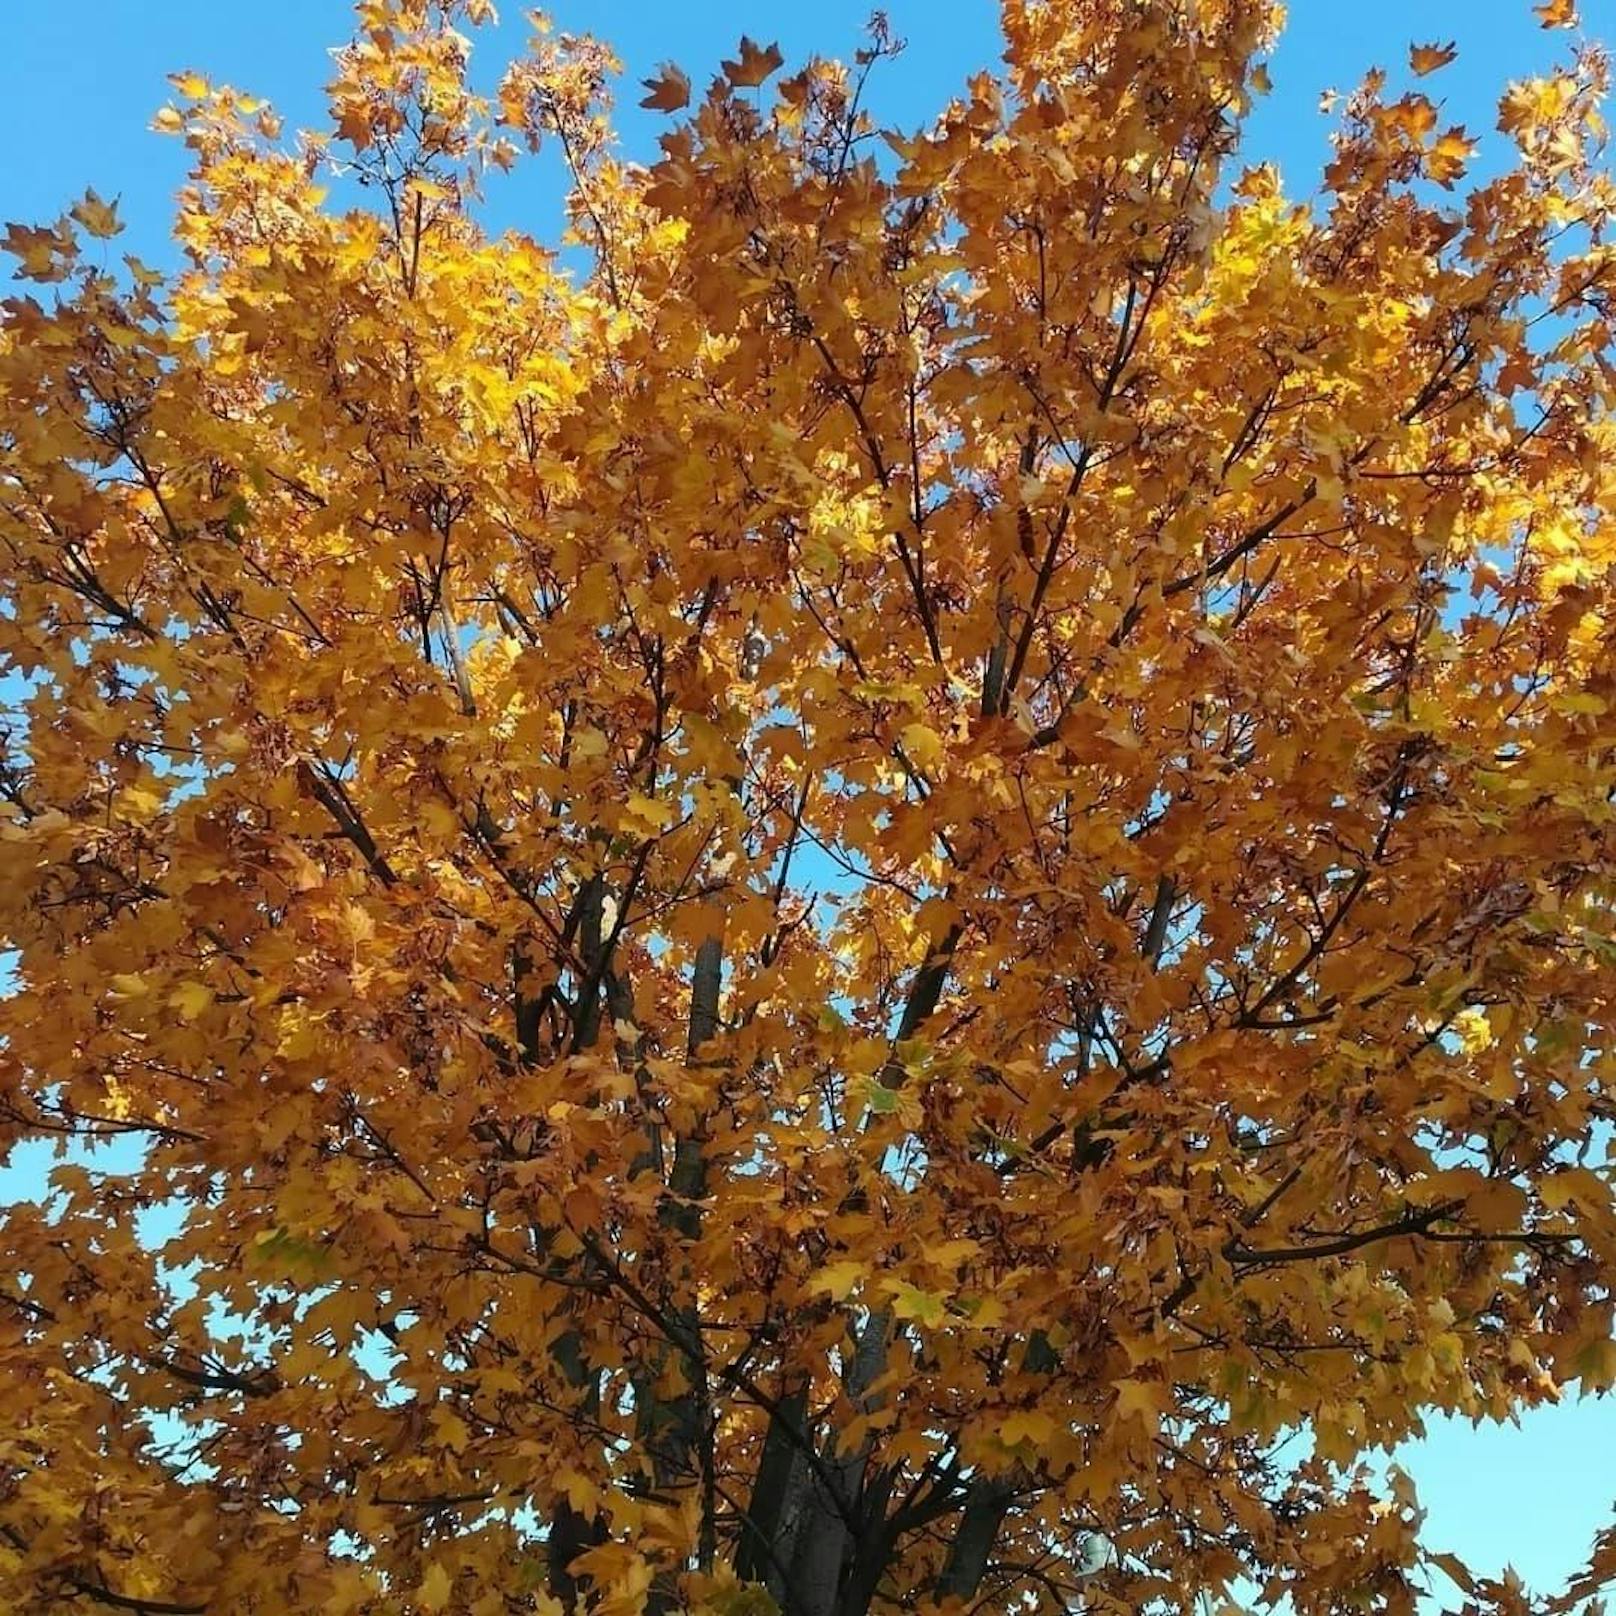 "Yellow tree"